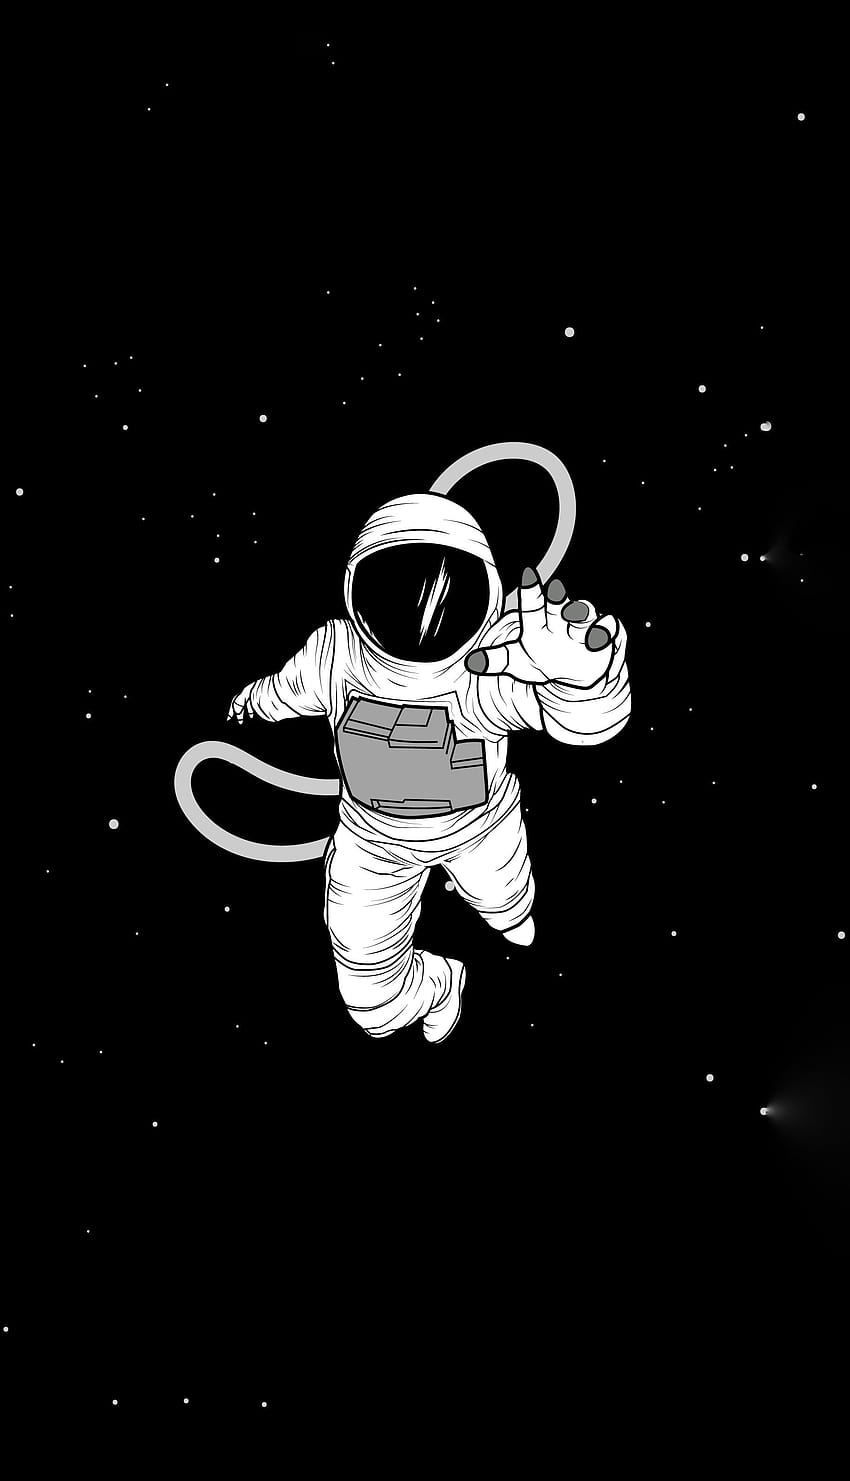 TEMA] DYNAMIC SPACEMAN, astronauta amoled dark mode Papel de parede de celular HD